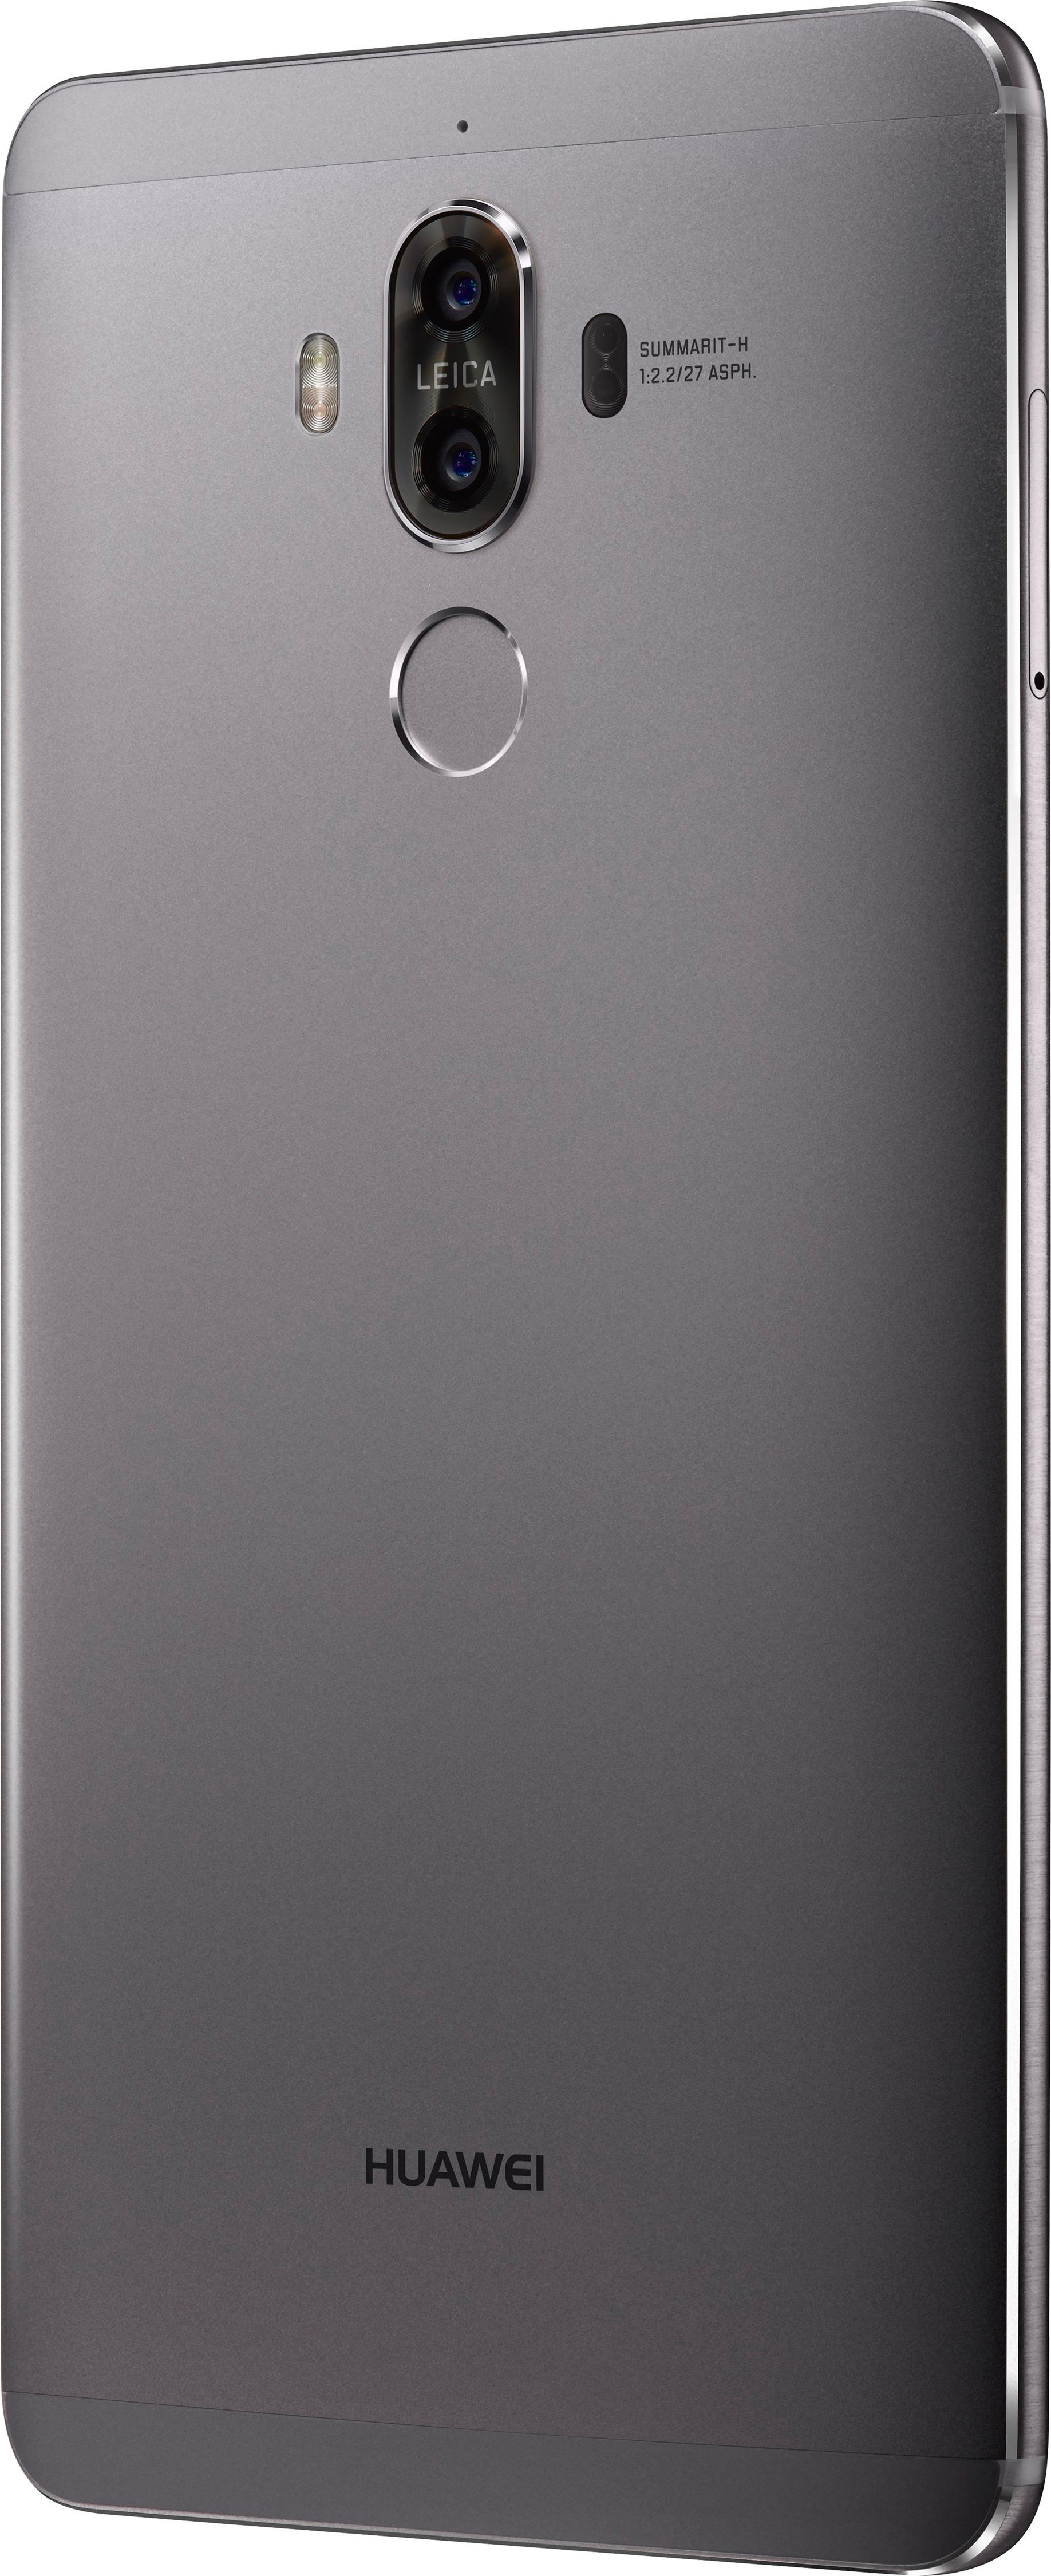 Beide Algebra Niet genoeg Best Buy: Huawei Refurbished Mate 9 4G LTE with 64GB Memory Cell Phone  (Unlocked) Space Gray RFRB-MHA-L29